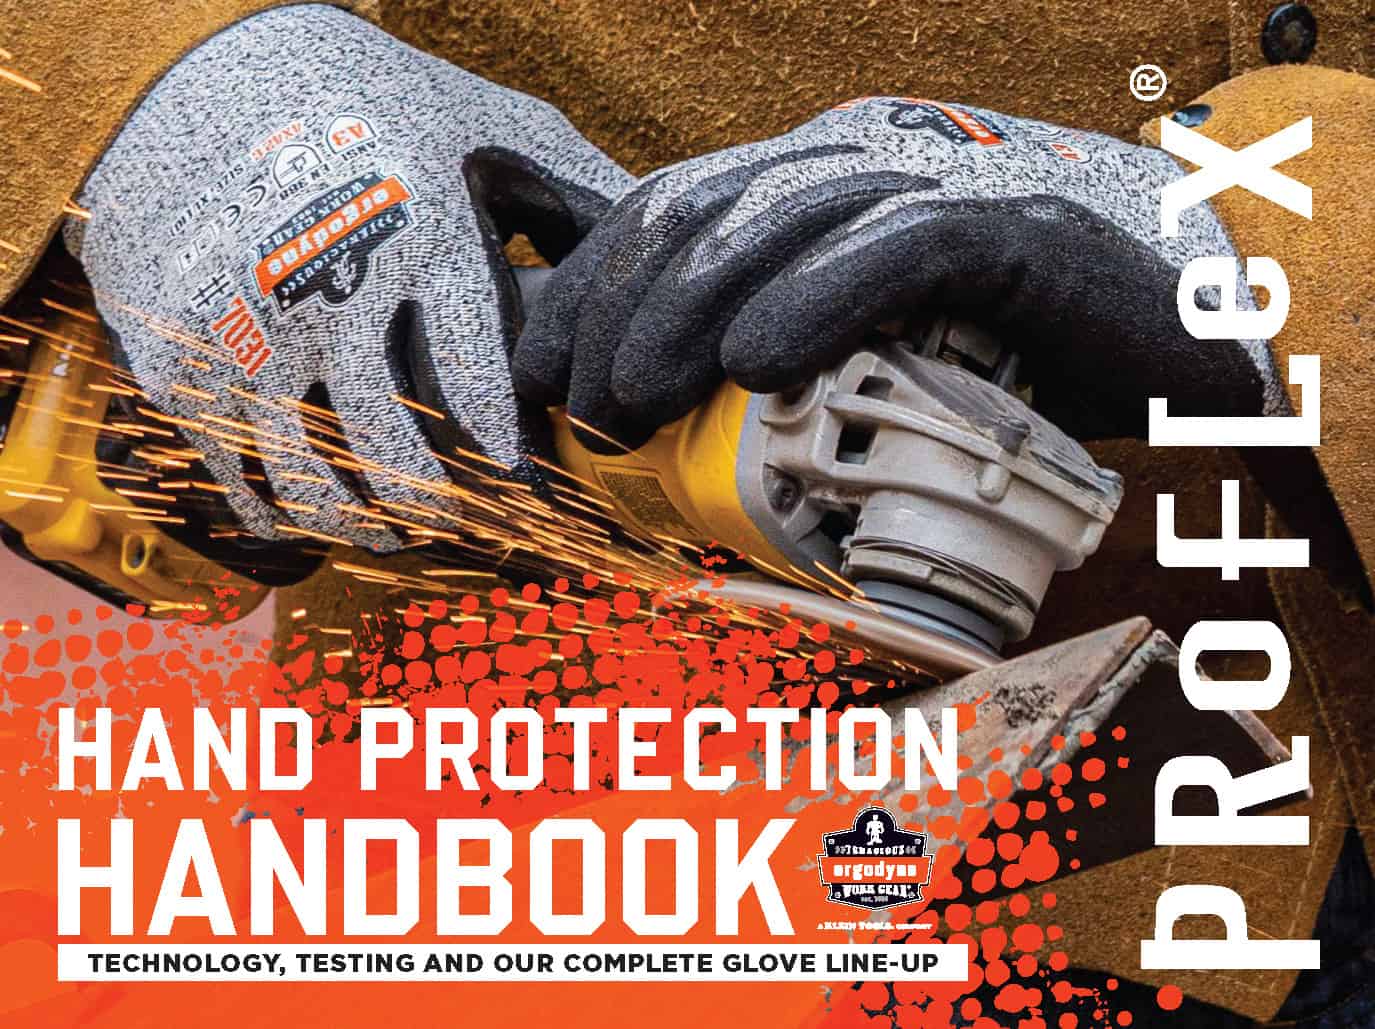 ergodyne proflex hand protection glove book pdf